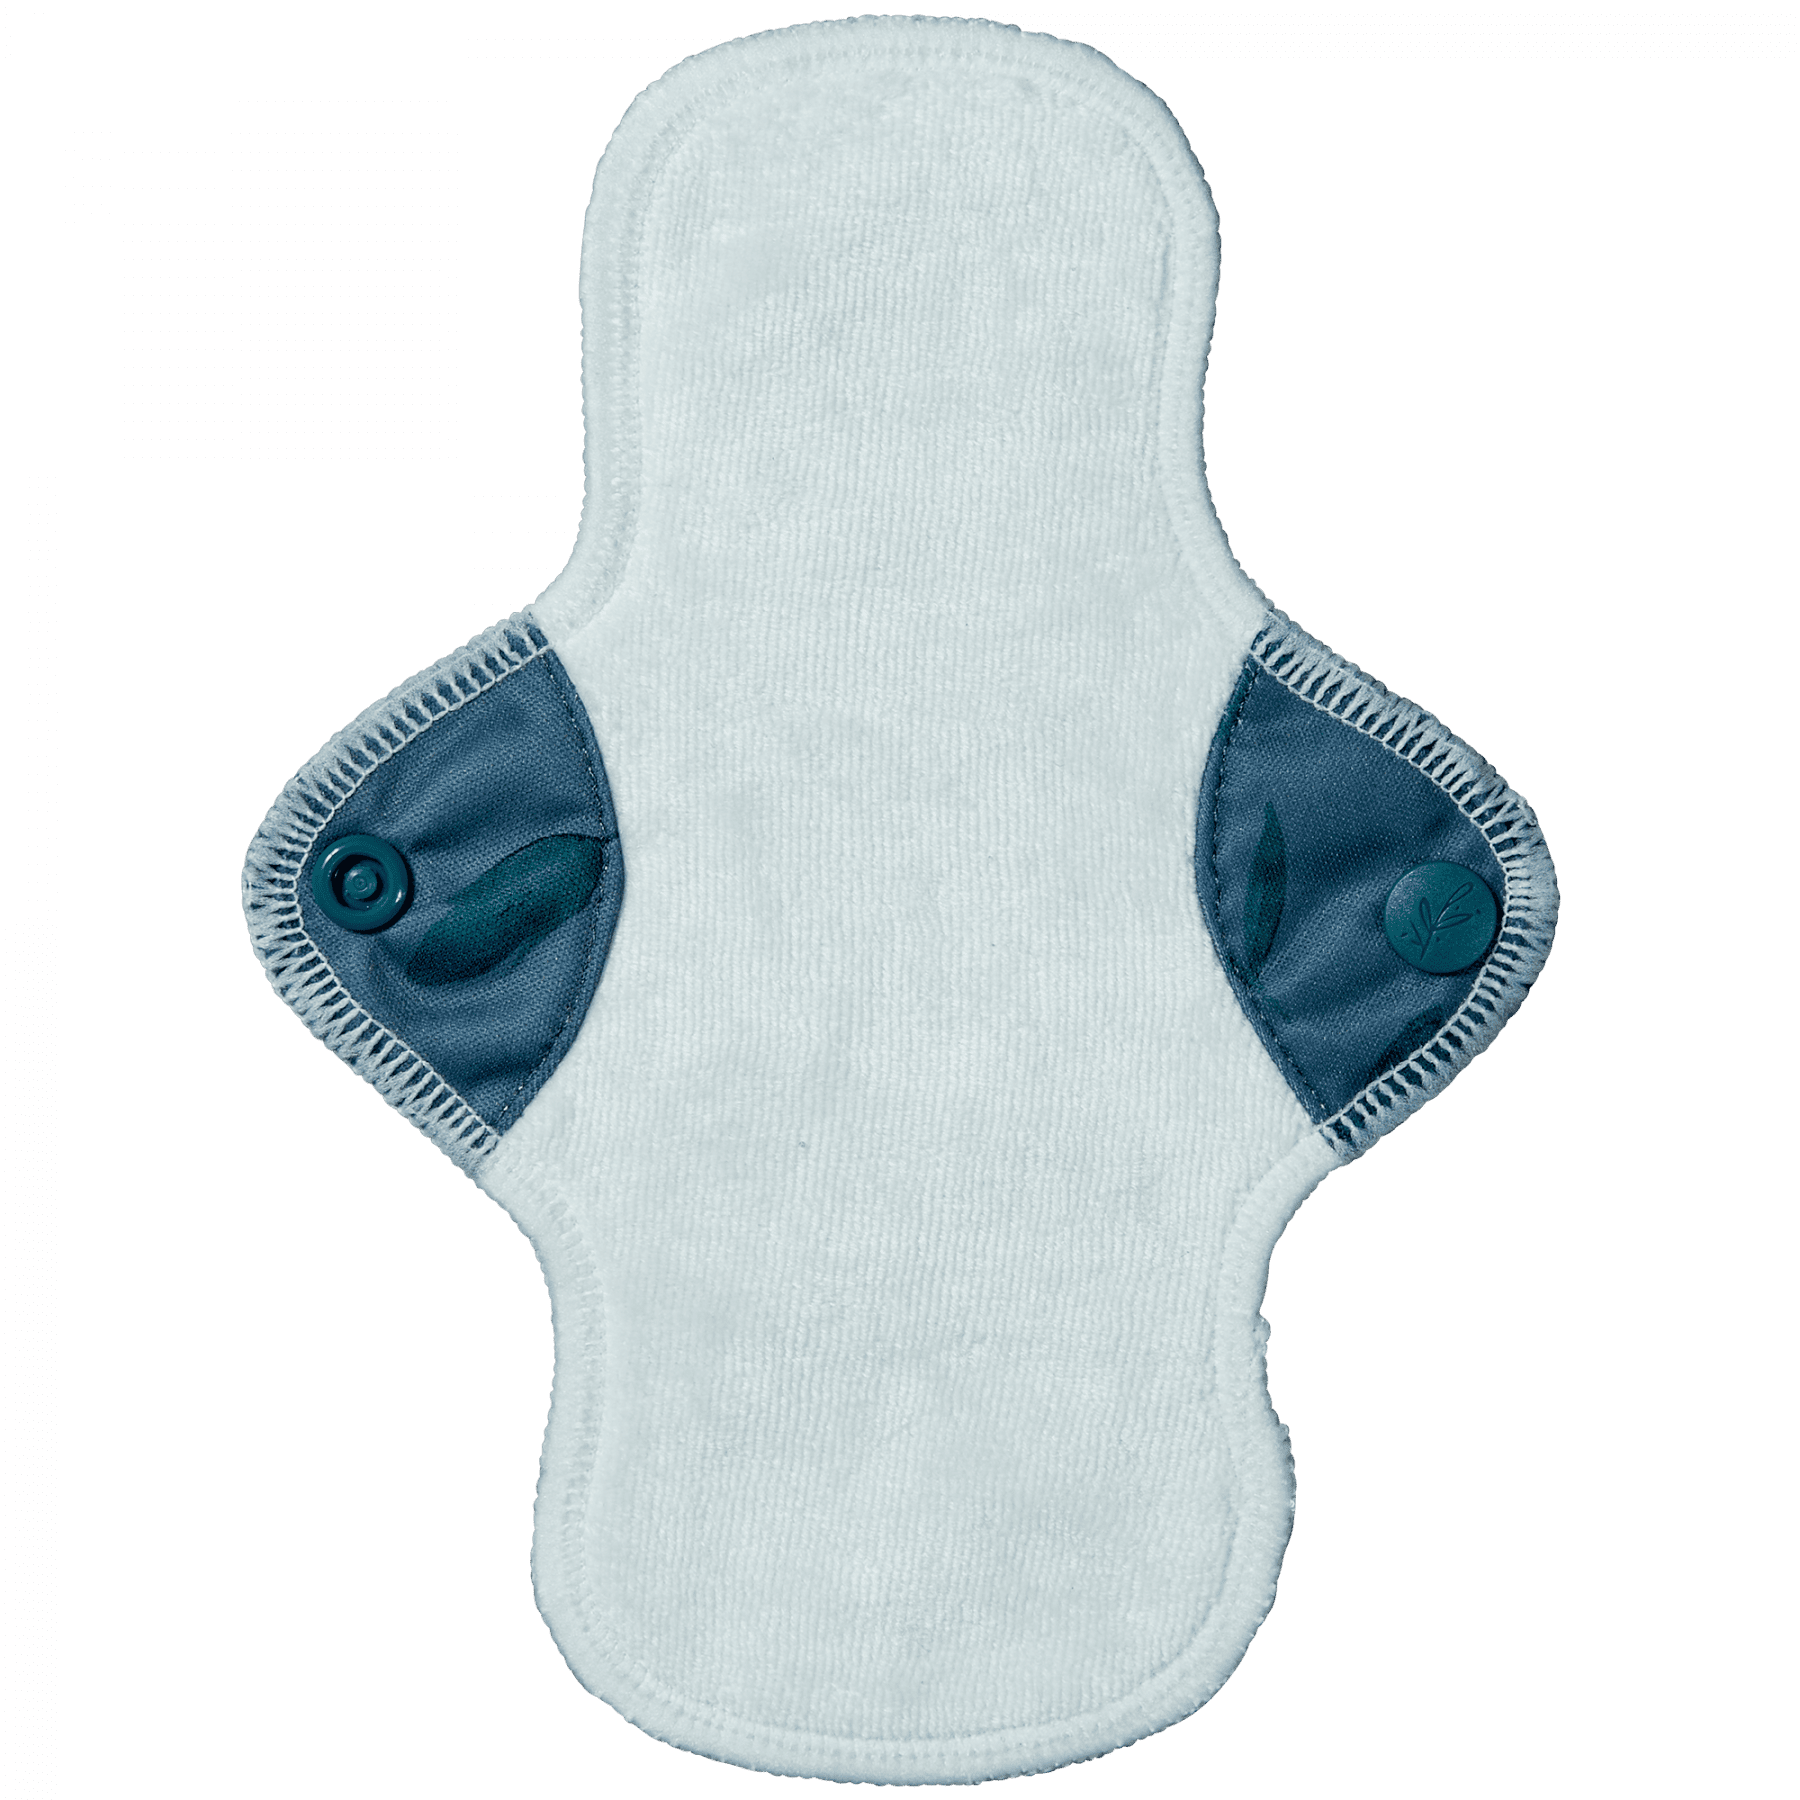 Light Flow - Pea - small sanitary pads